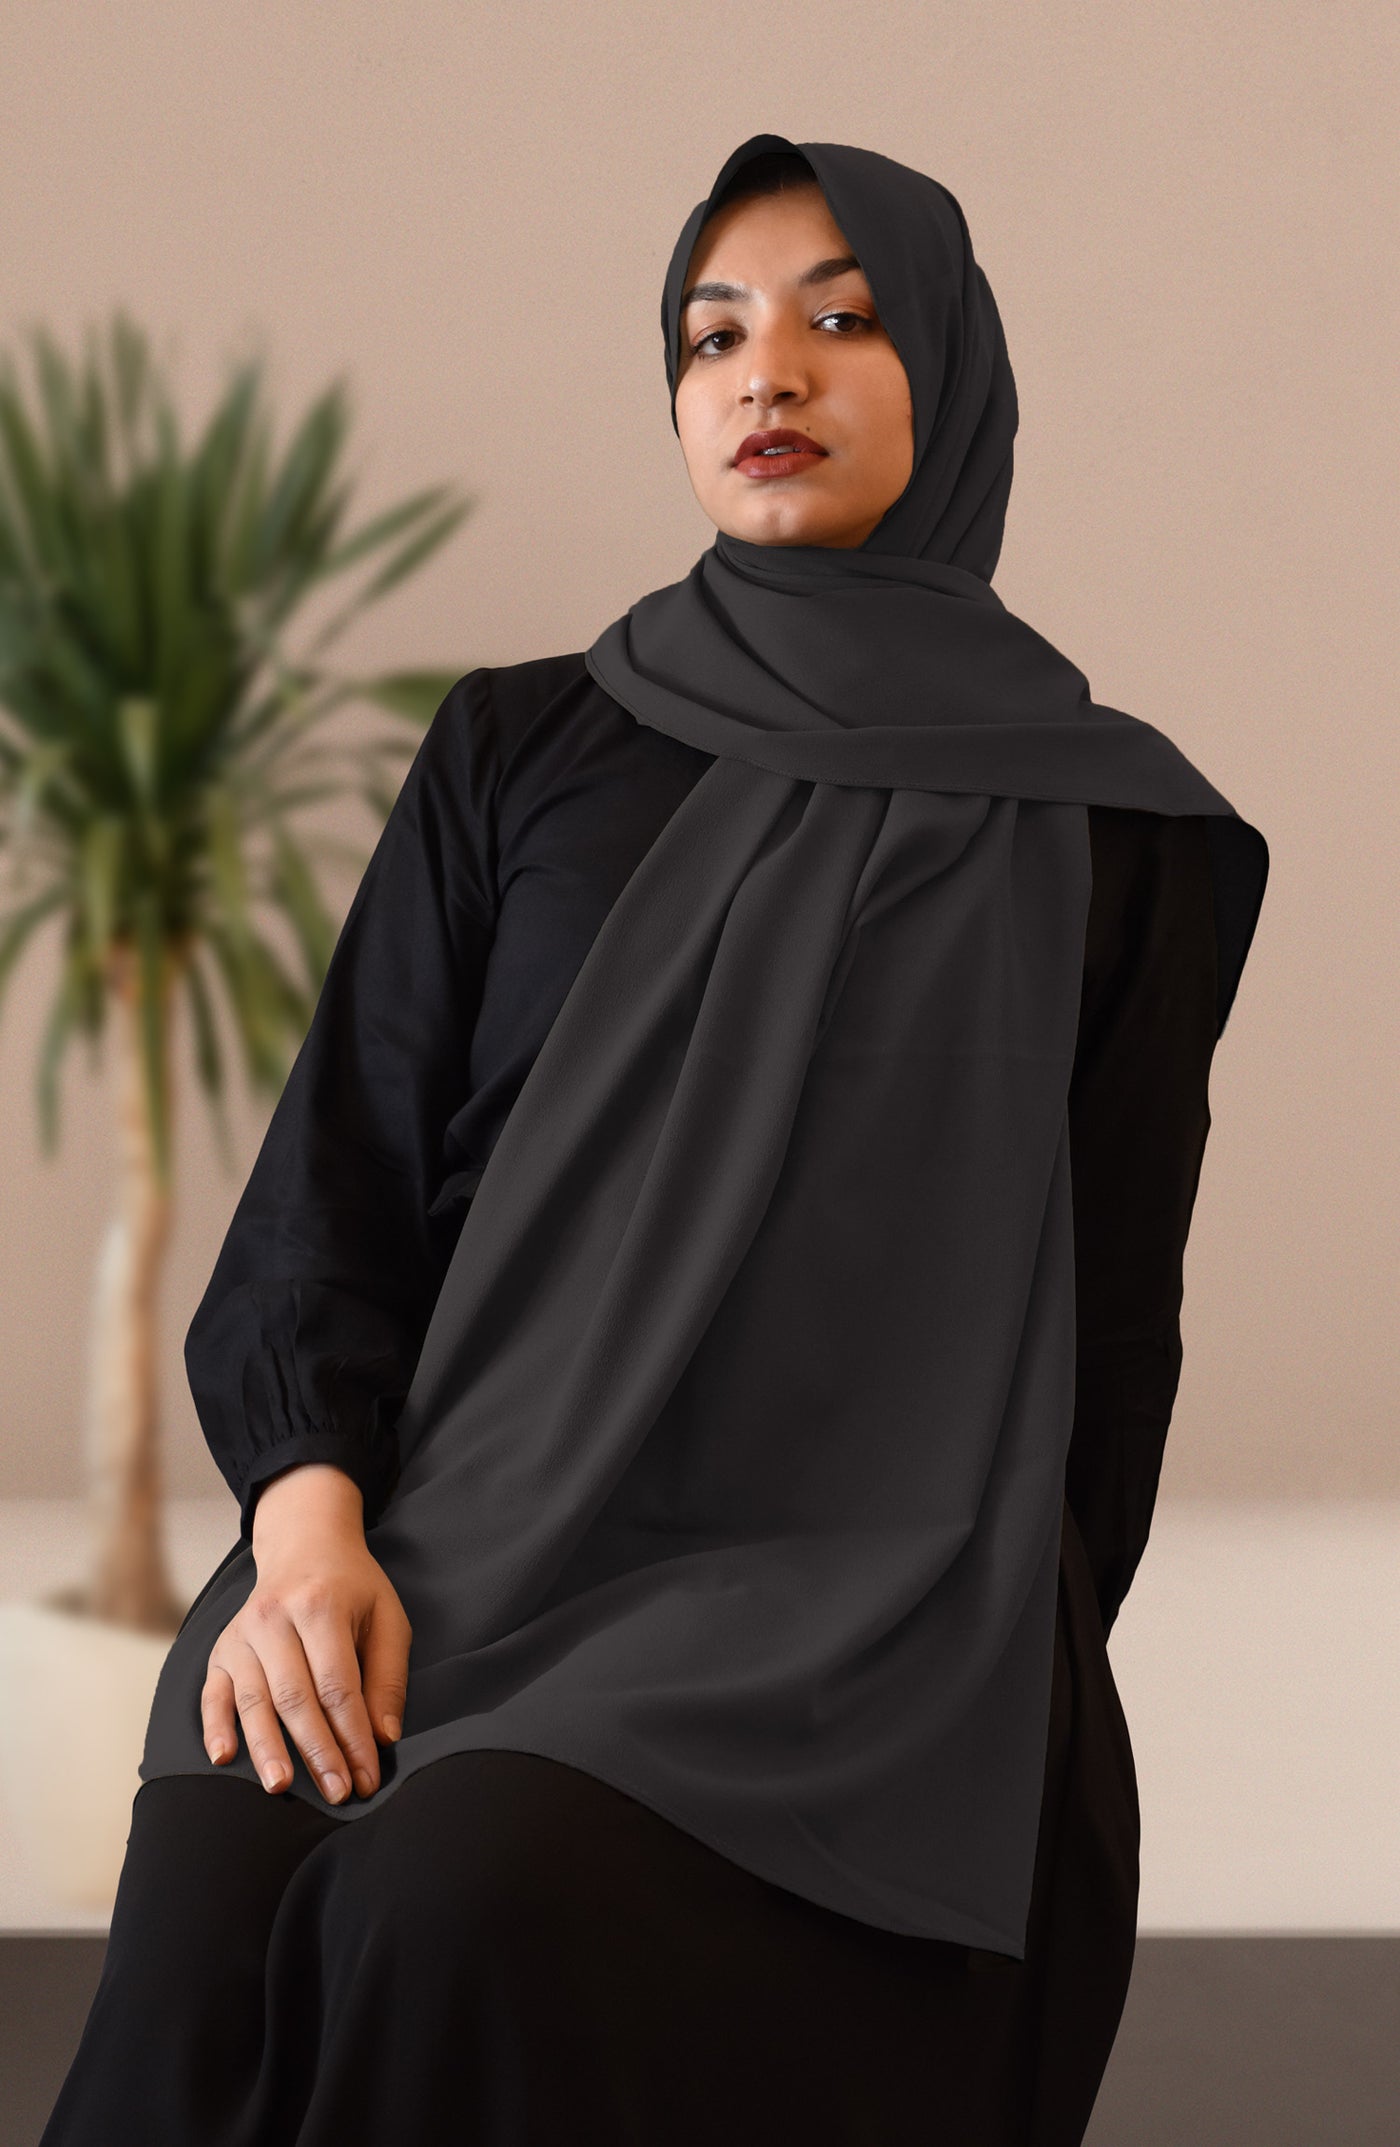 grey chiffon hijab for women in Pakistan